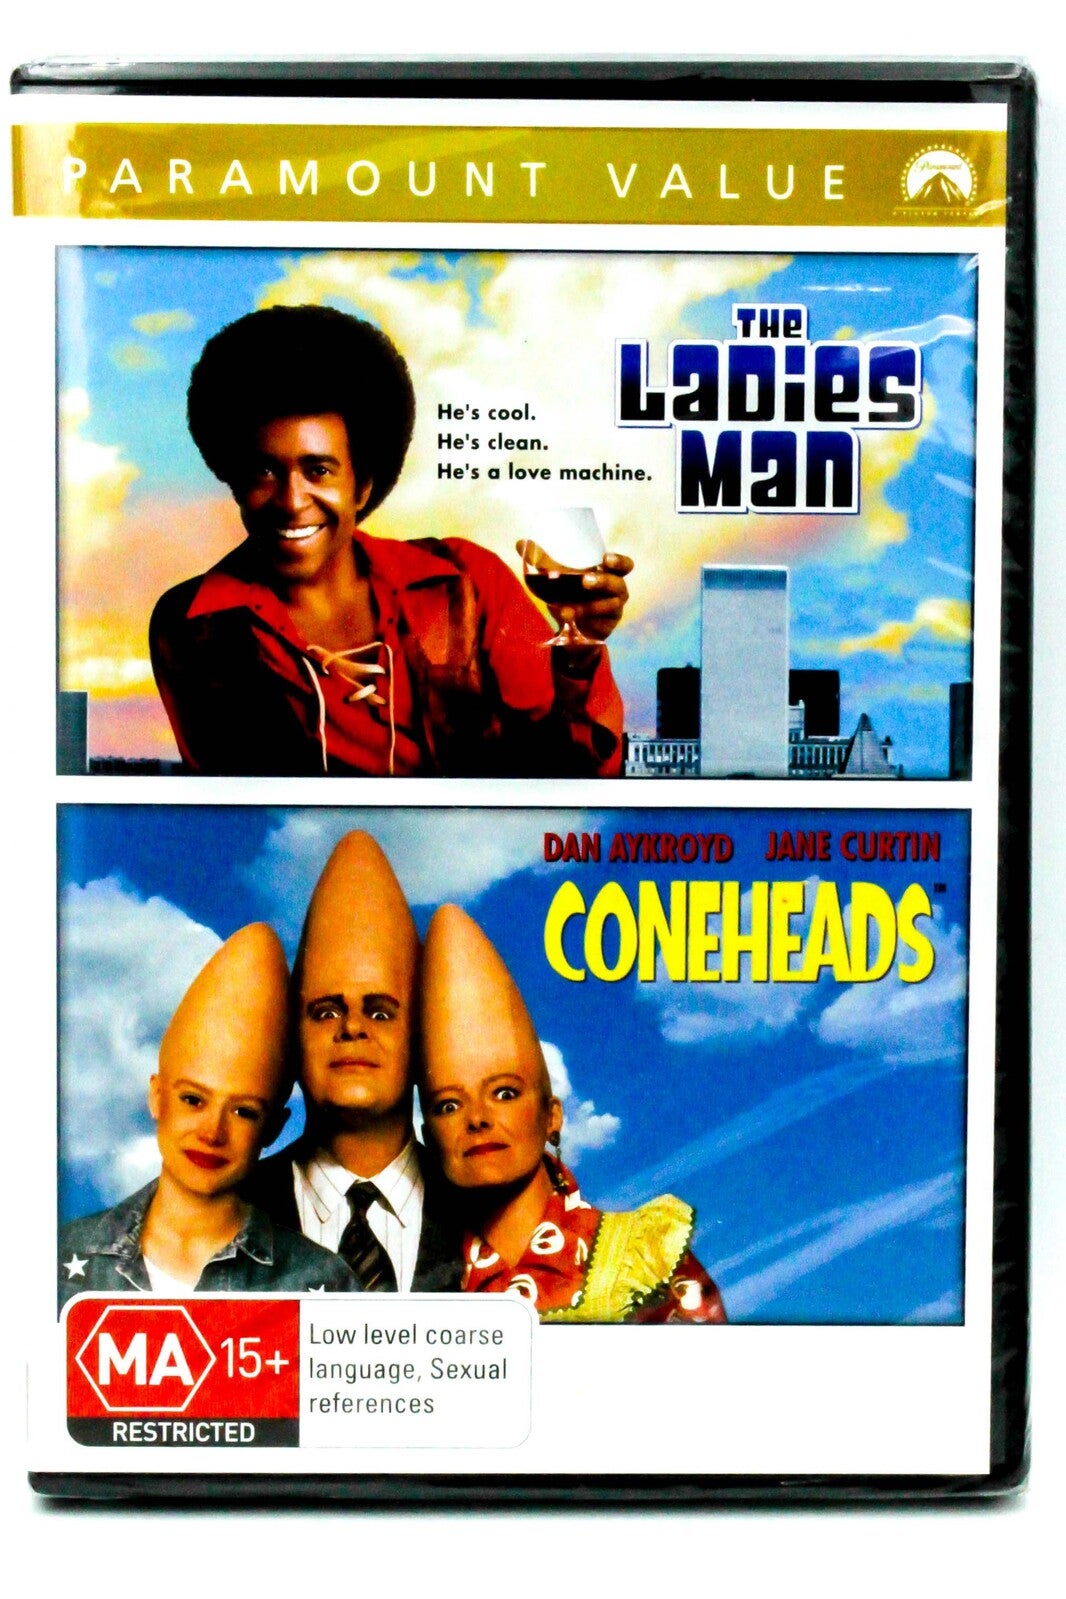 The Ladies Man / Coneheads - 2 Movie Set - Paramount Value DVD